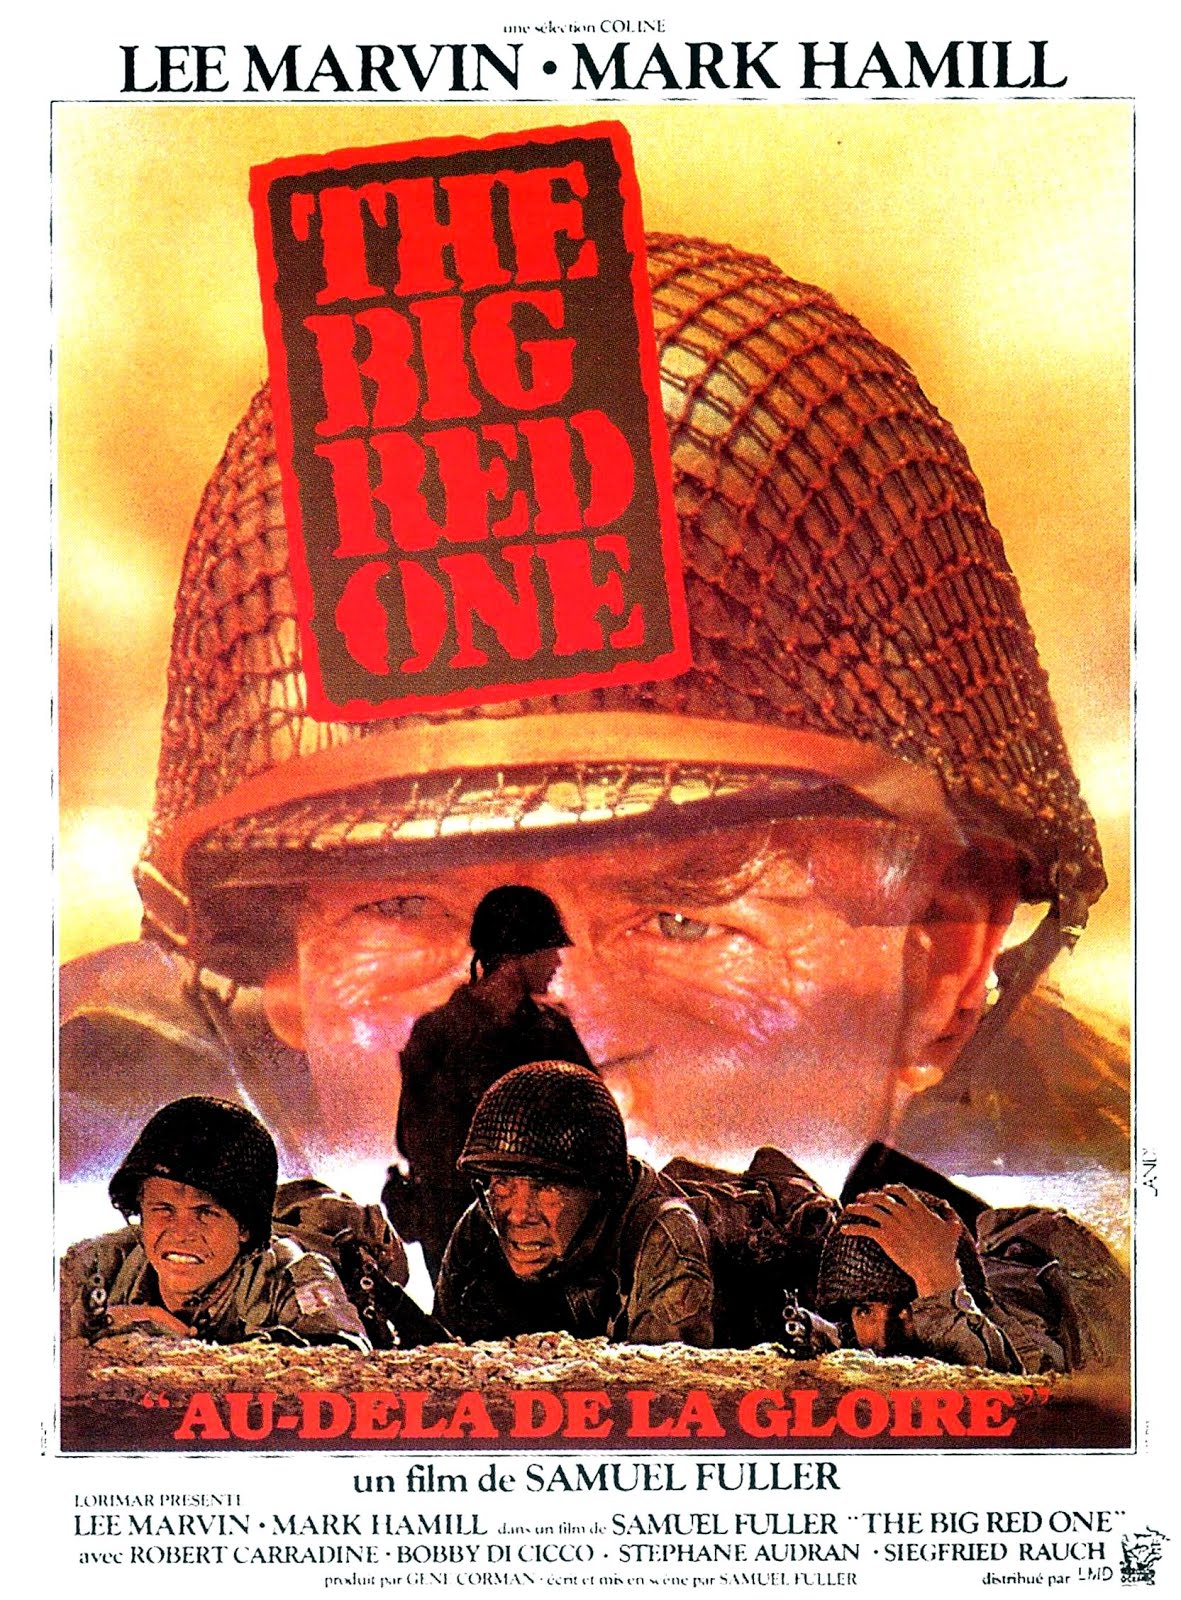 The big red one : Au-delà de la gloire (1979) Samuel Fuller - The big red one